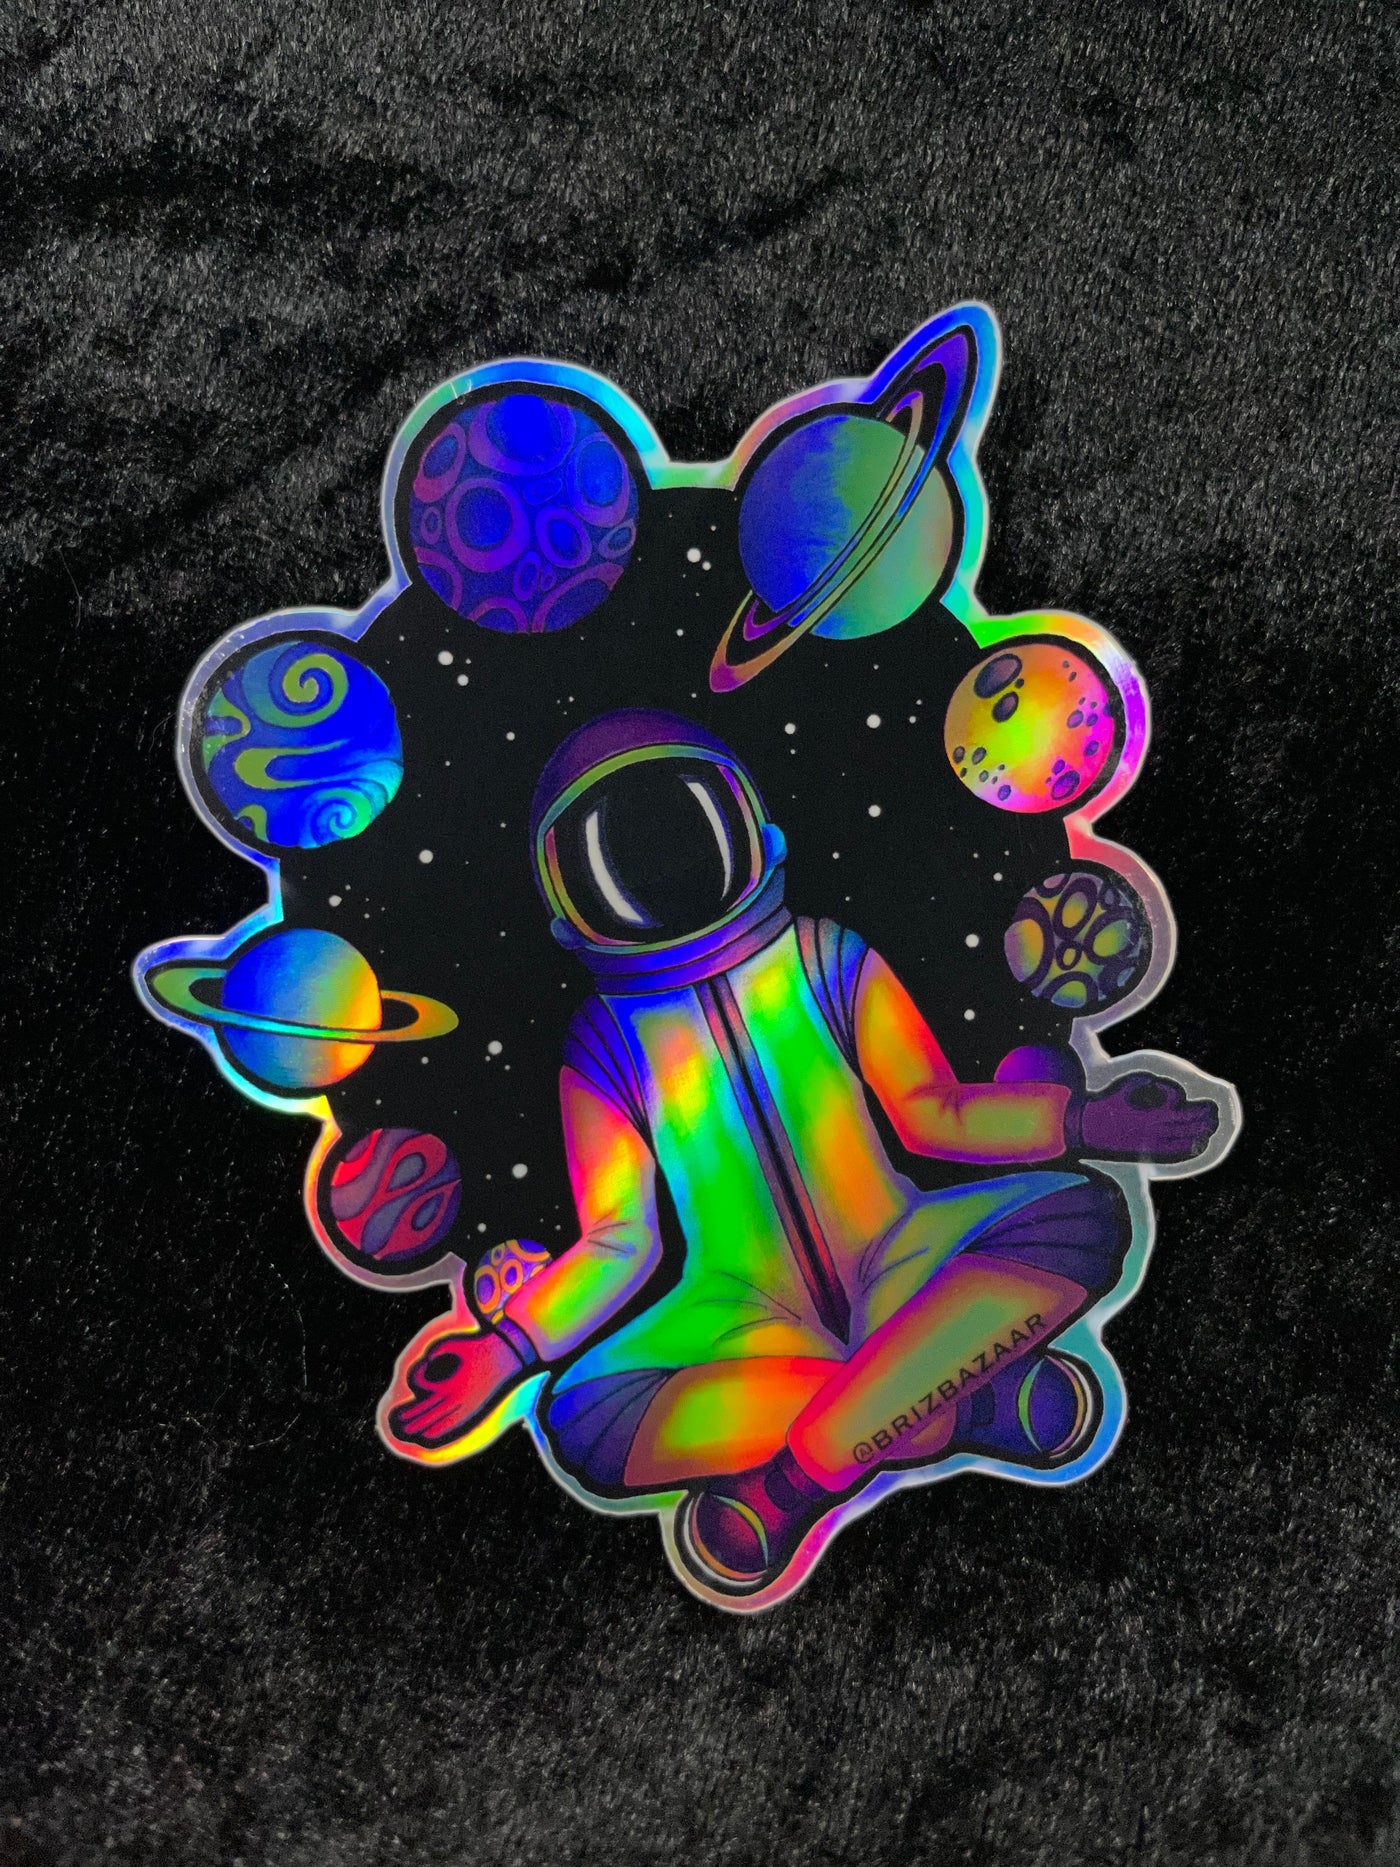 Holographic sticker of Acidnaut